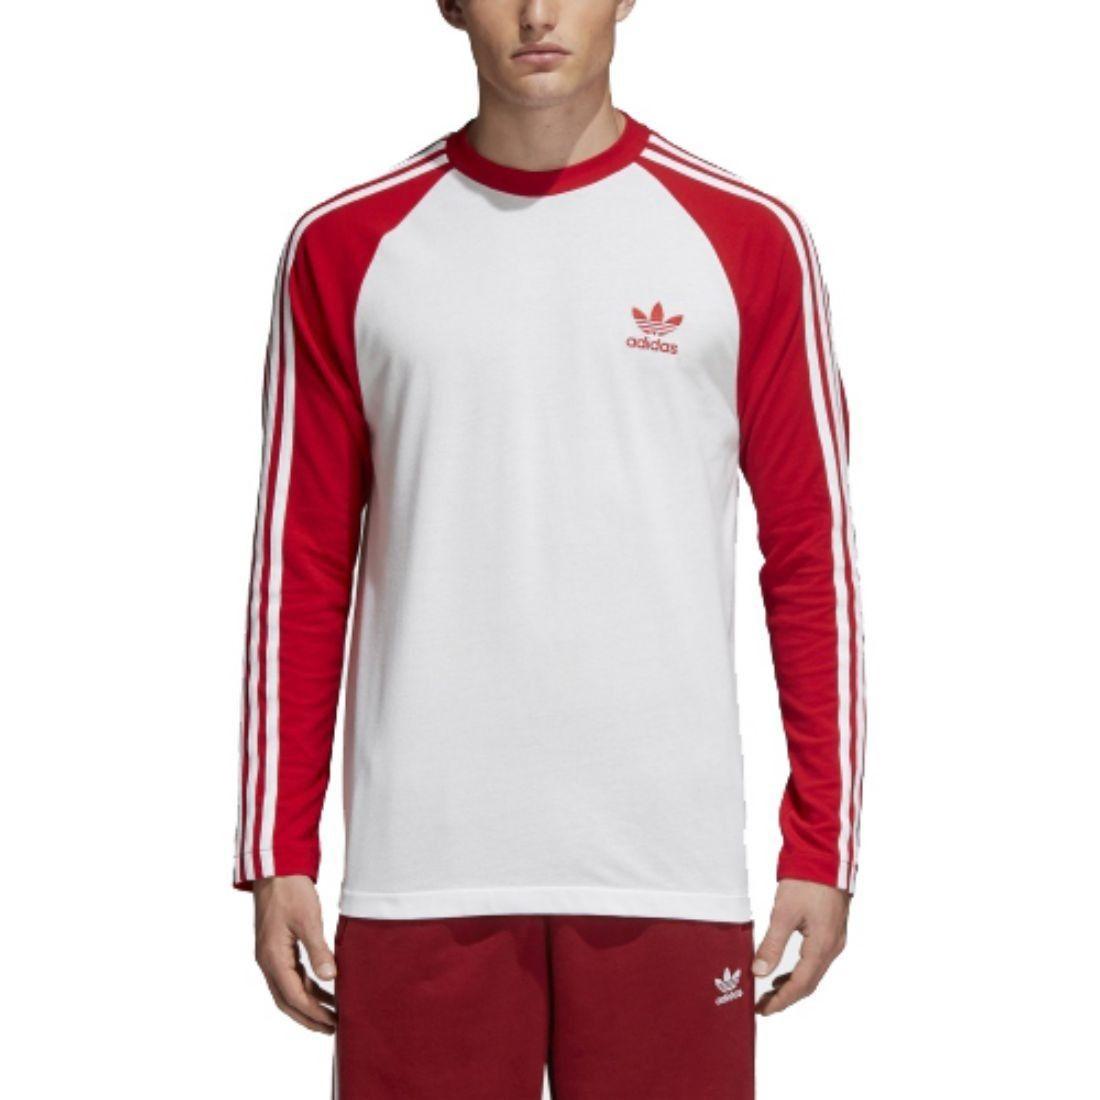 Two White Red L Logo - adidas Men's Long Sleeve 3 Stripes LS T Cw1231 White Red L | eBay